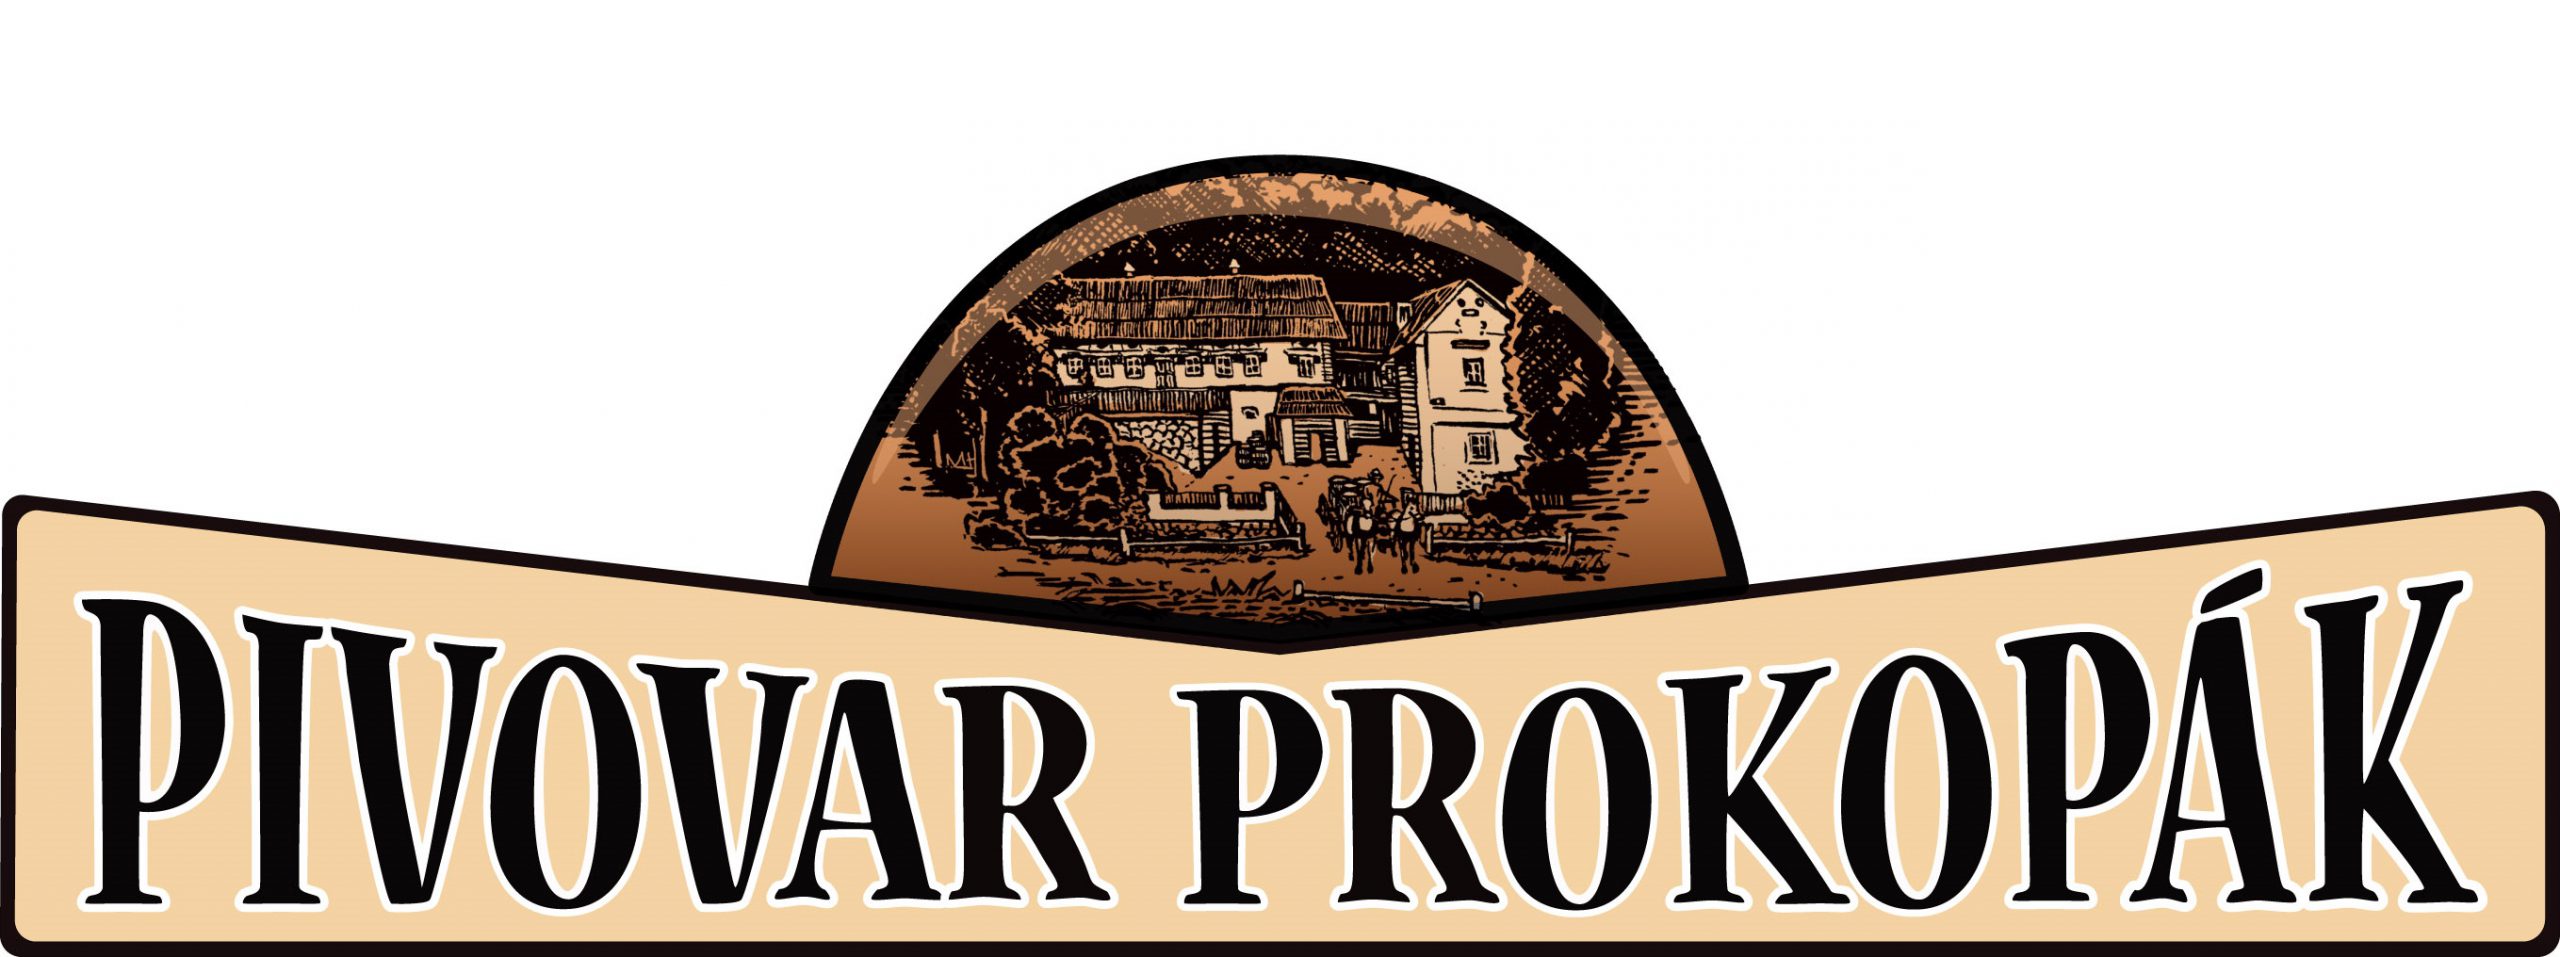 Pivovar Prokopák